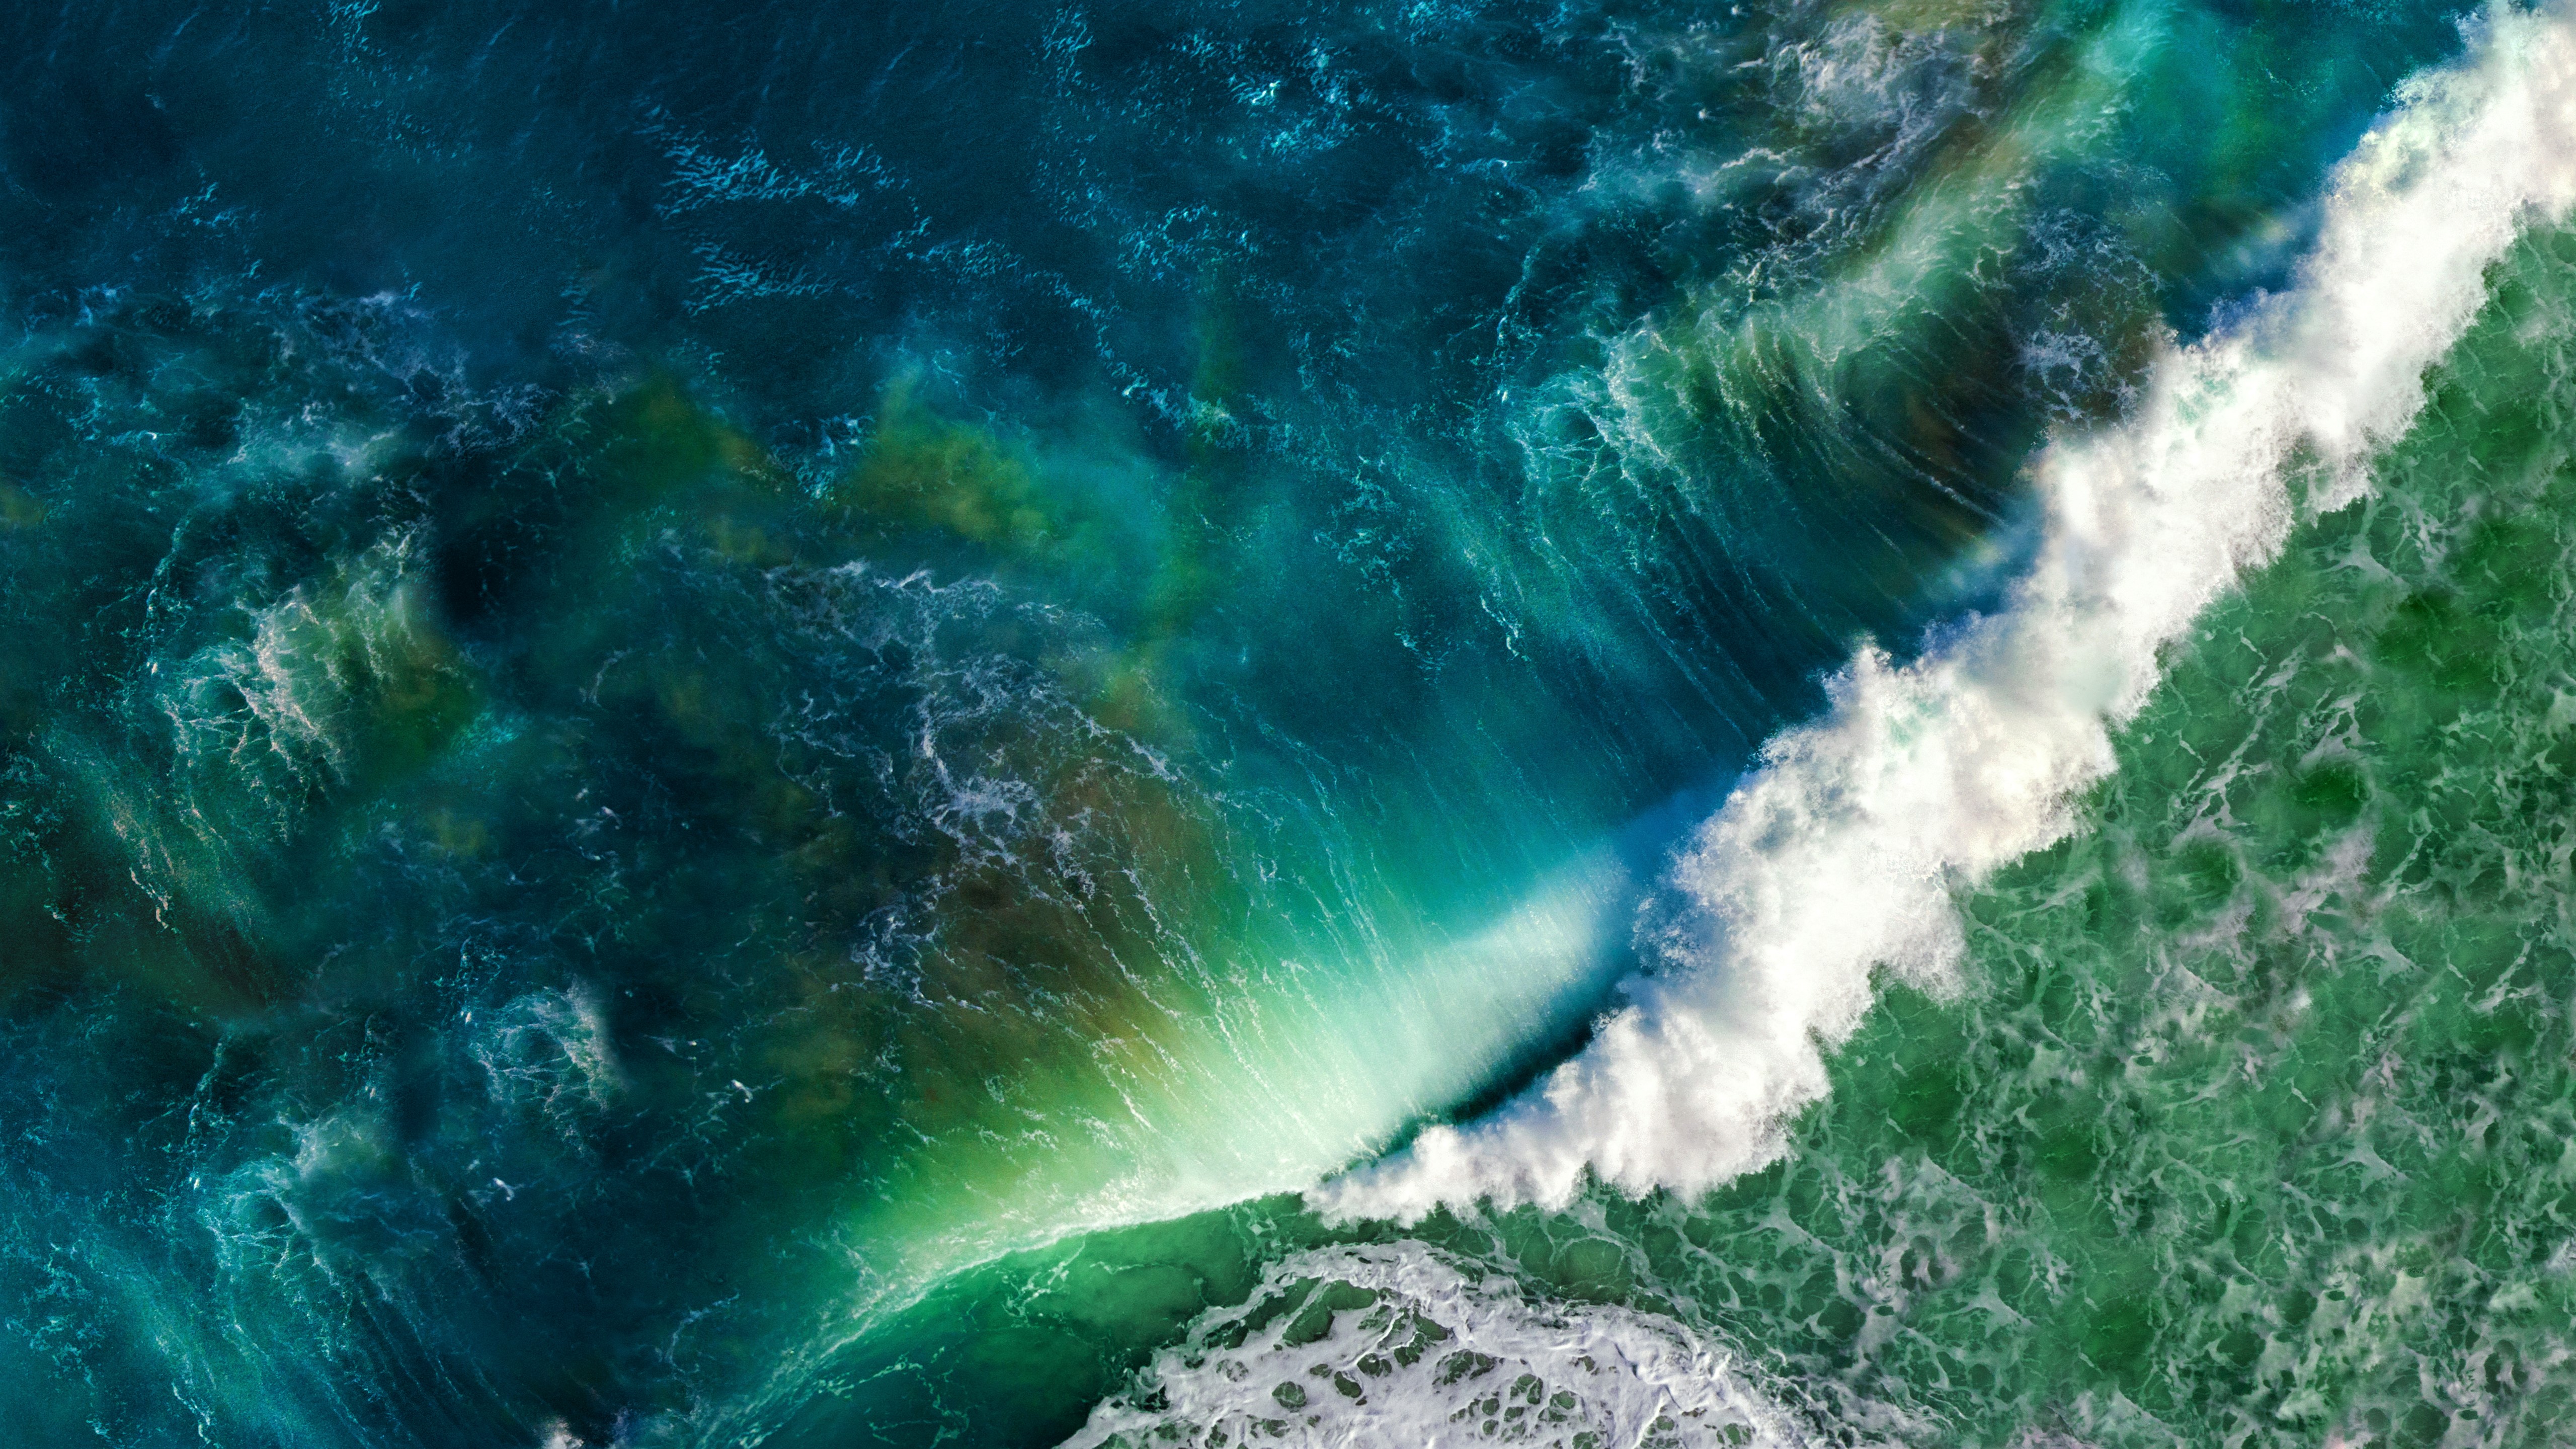 Ocean Waves 5k Retina Ultra Hd Wallpaper Background Image 5120x2880